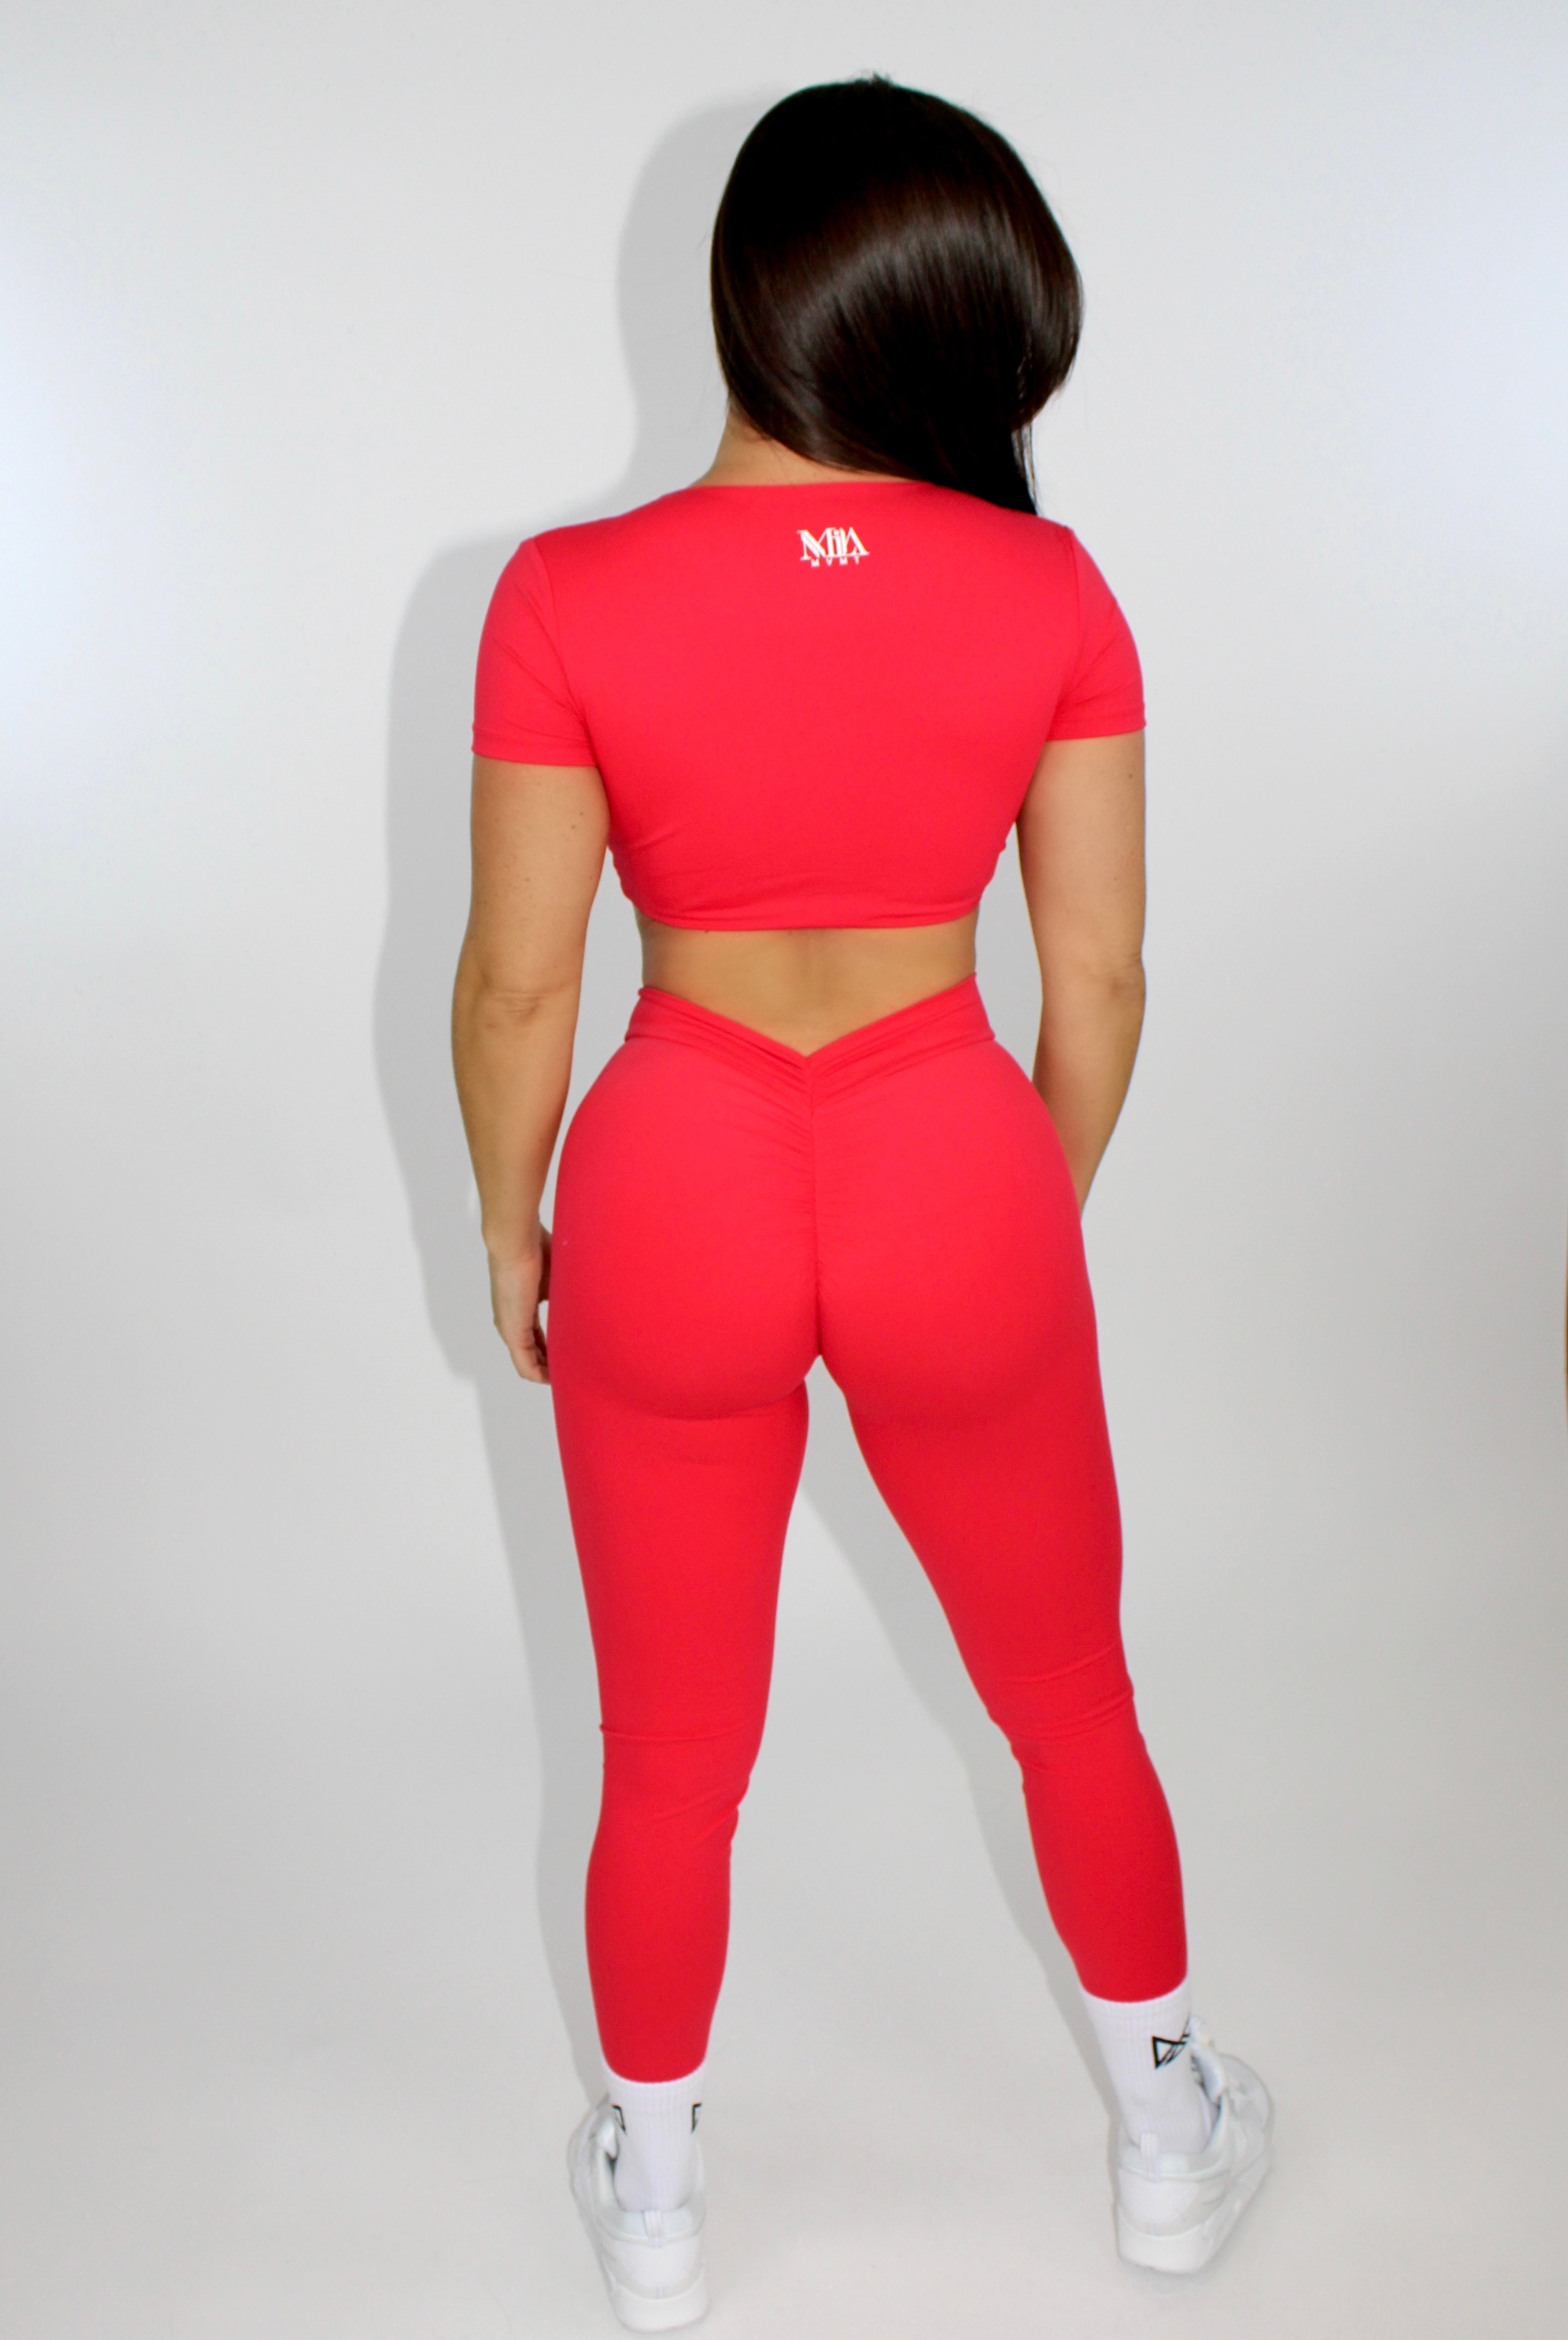 MILA MVMT Sportswear Gymwear Sports Gym Athleisure Gymfits Yoga Red back view crop top